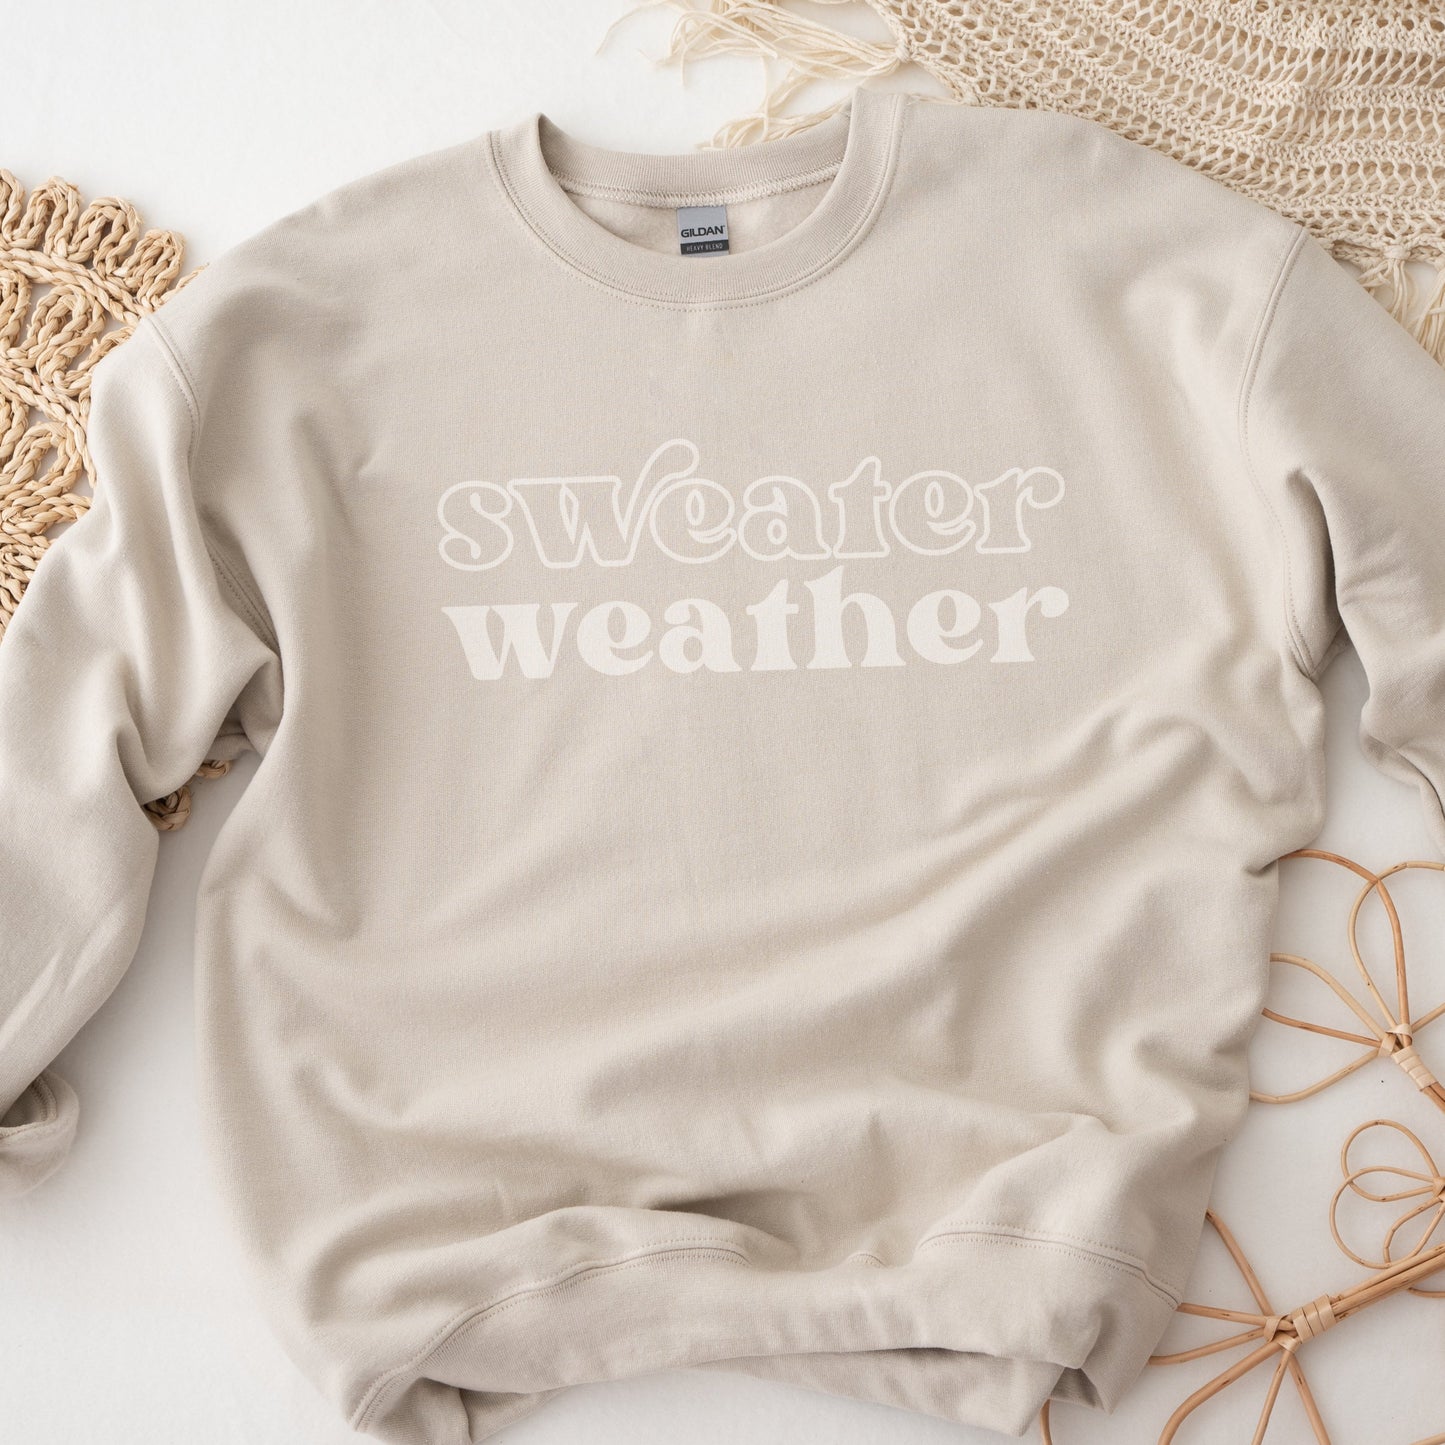 Sweater Weather Crewneck - Screen Printed Sweater- Unisex Neural sweatshirt -